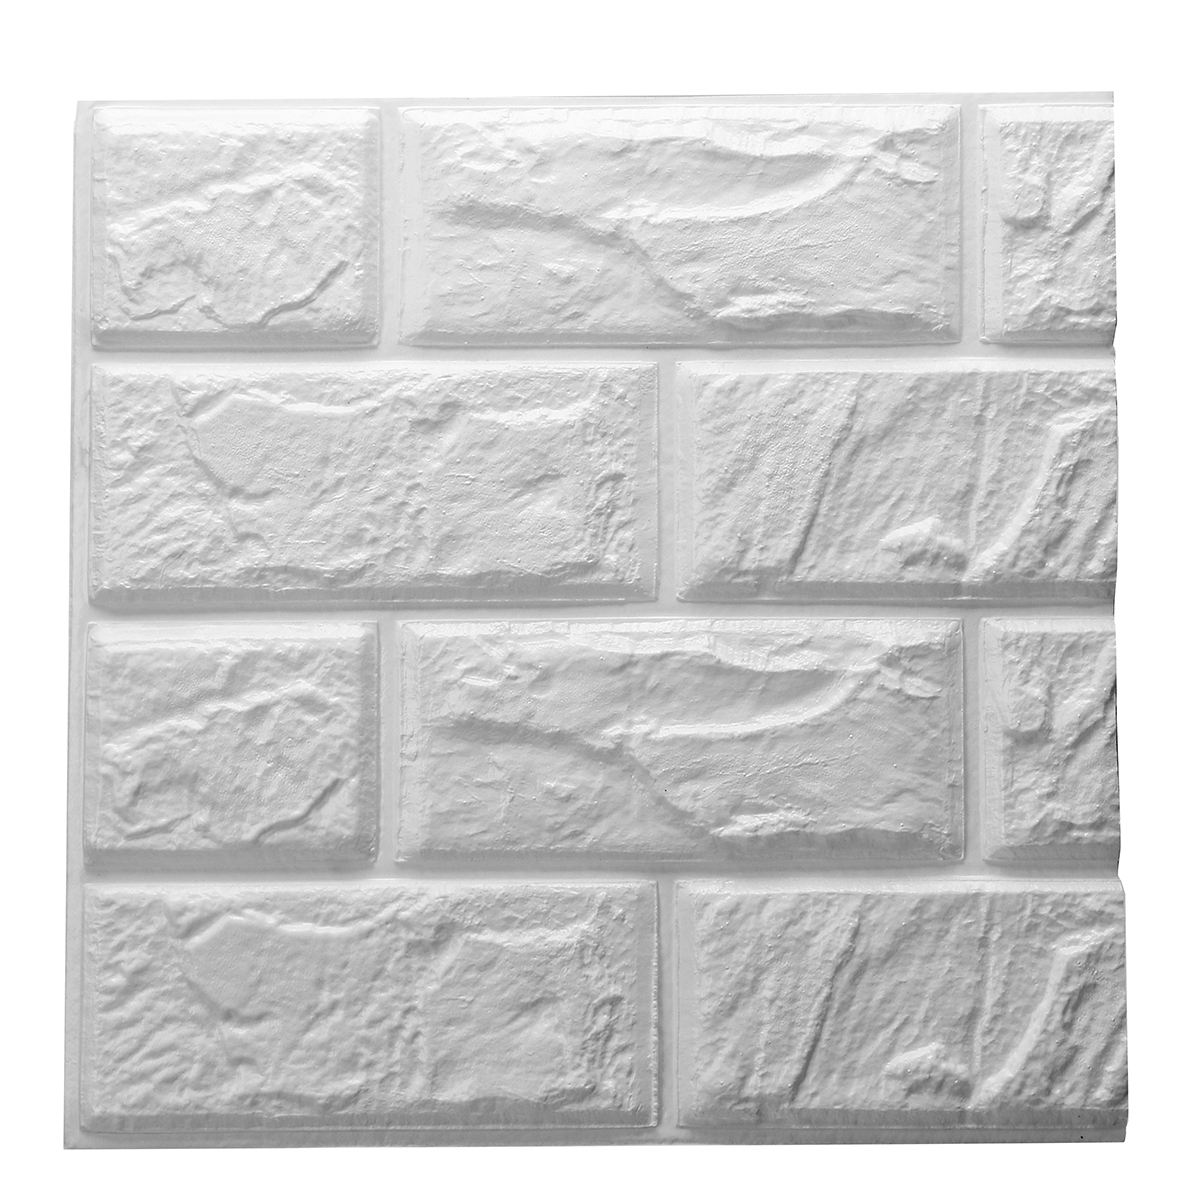 

PE Foam 3D Self Adhesive DIY Panels Wall Sticker Home Decor Embossed Brick